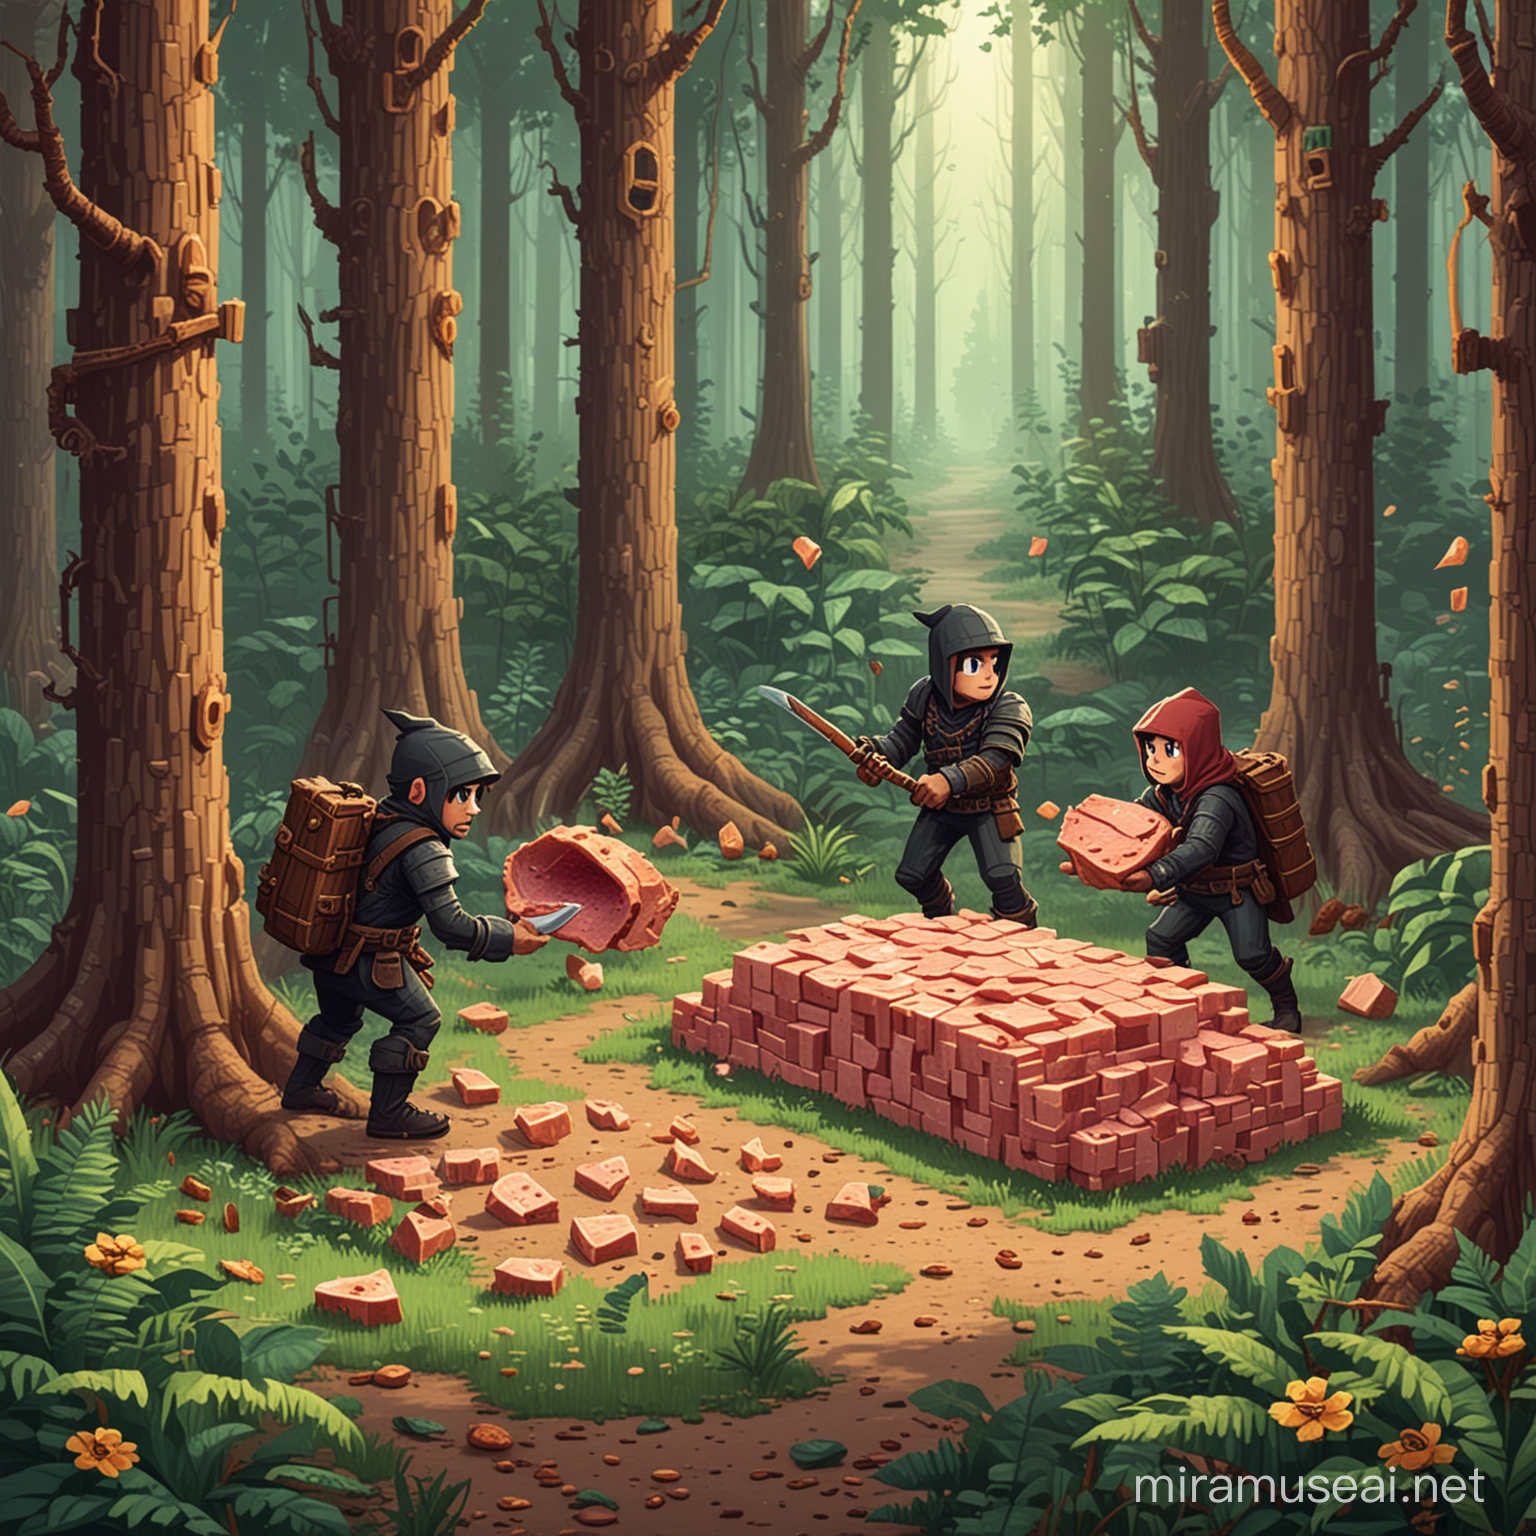 Forest Pixel Art Thieves Stealing a Ham Slice